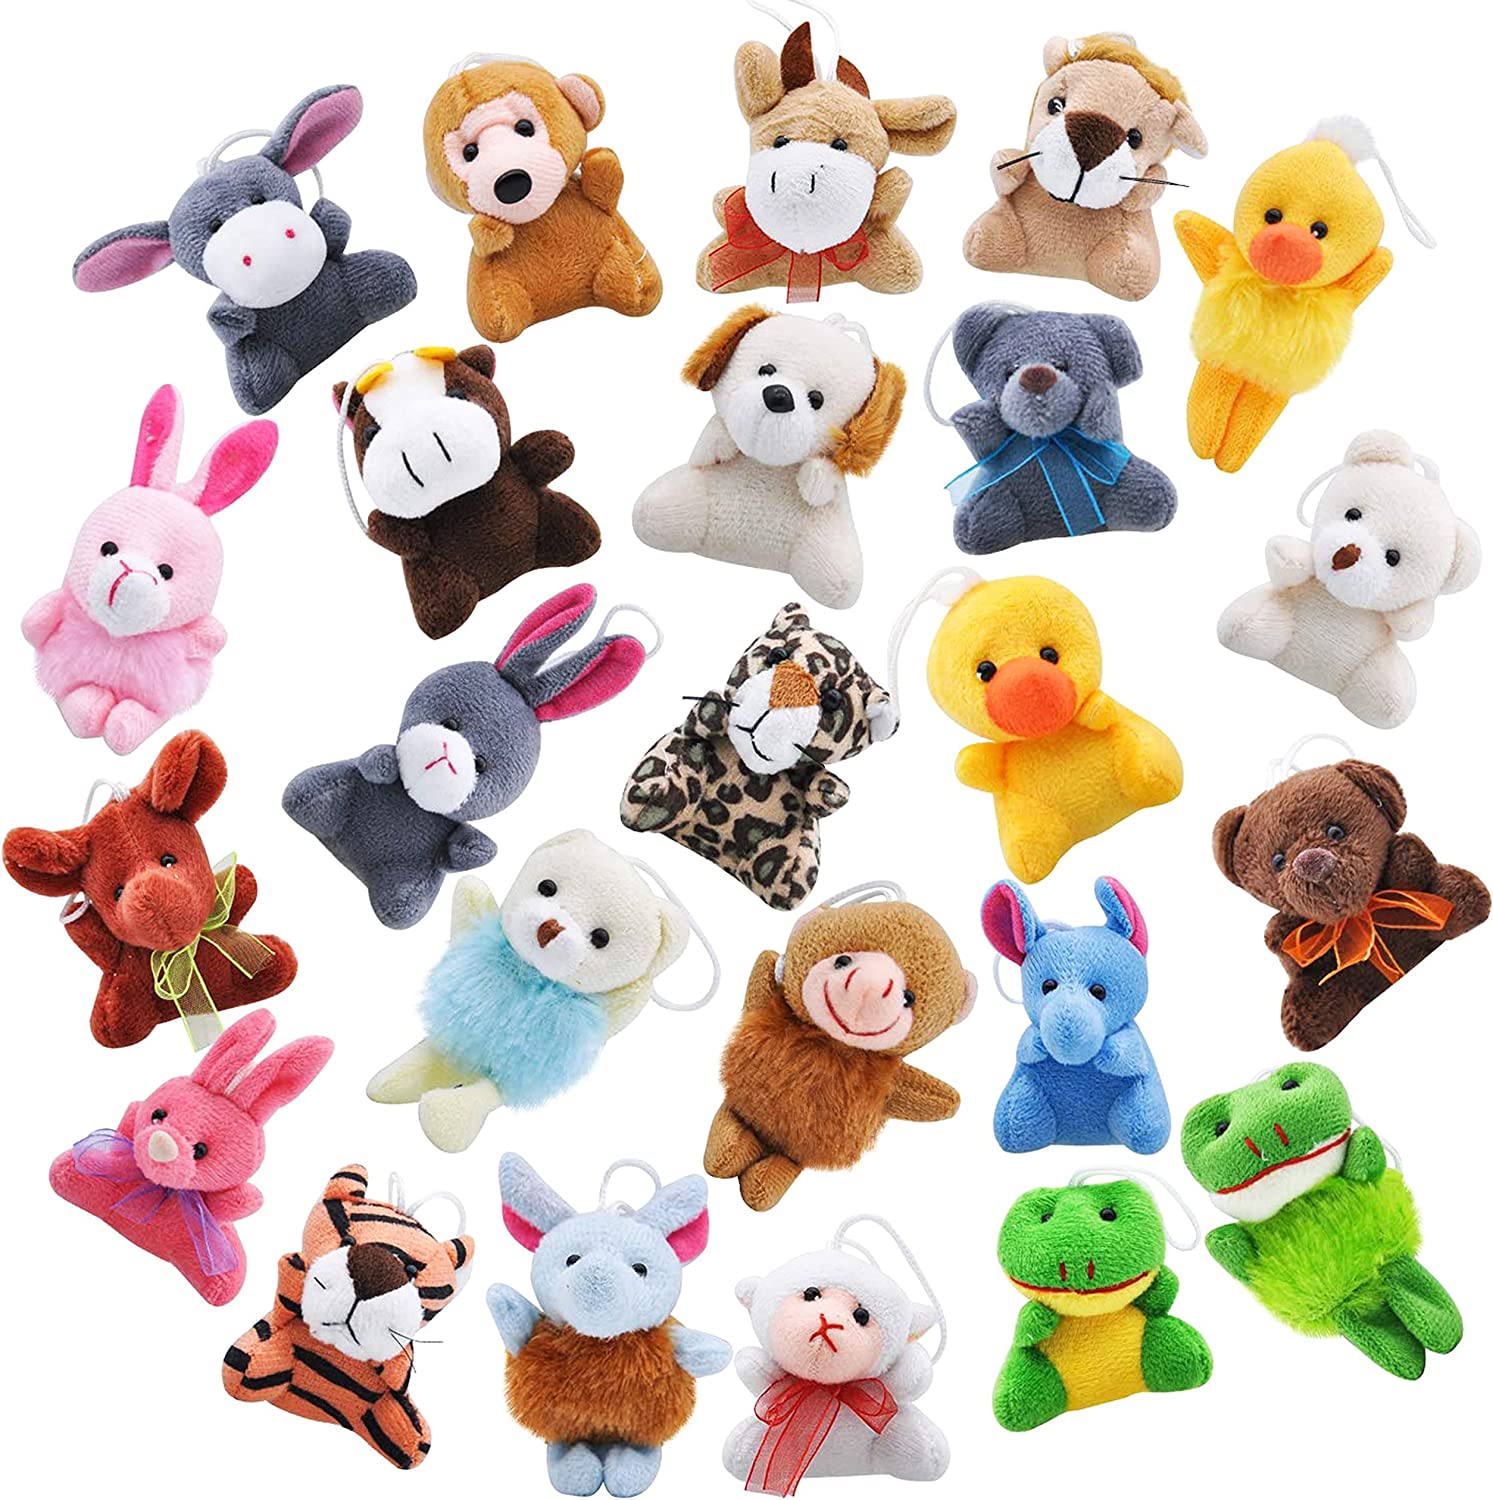 JOYIN  3 Animal Plush Toys, 24 Pack